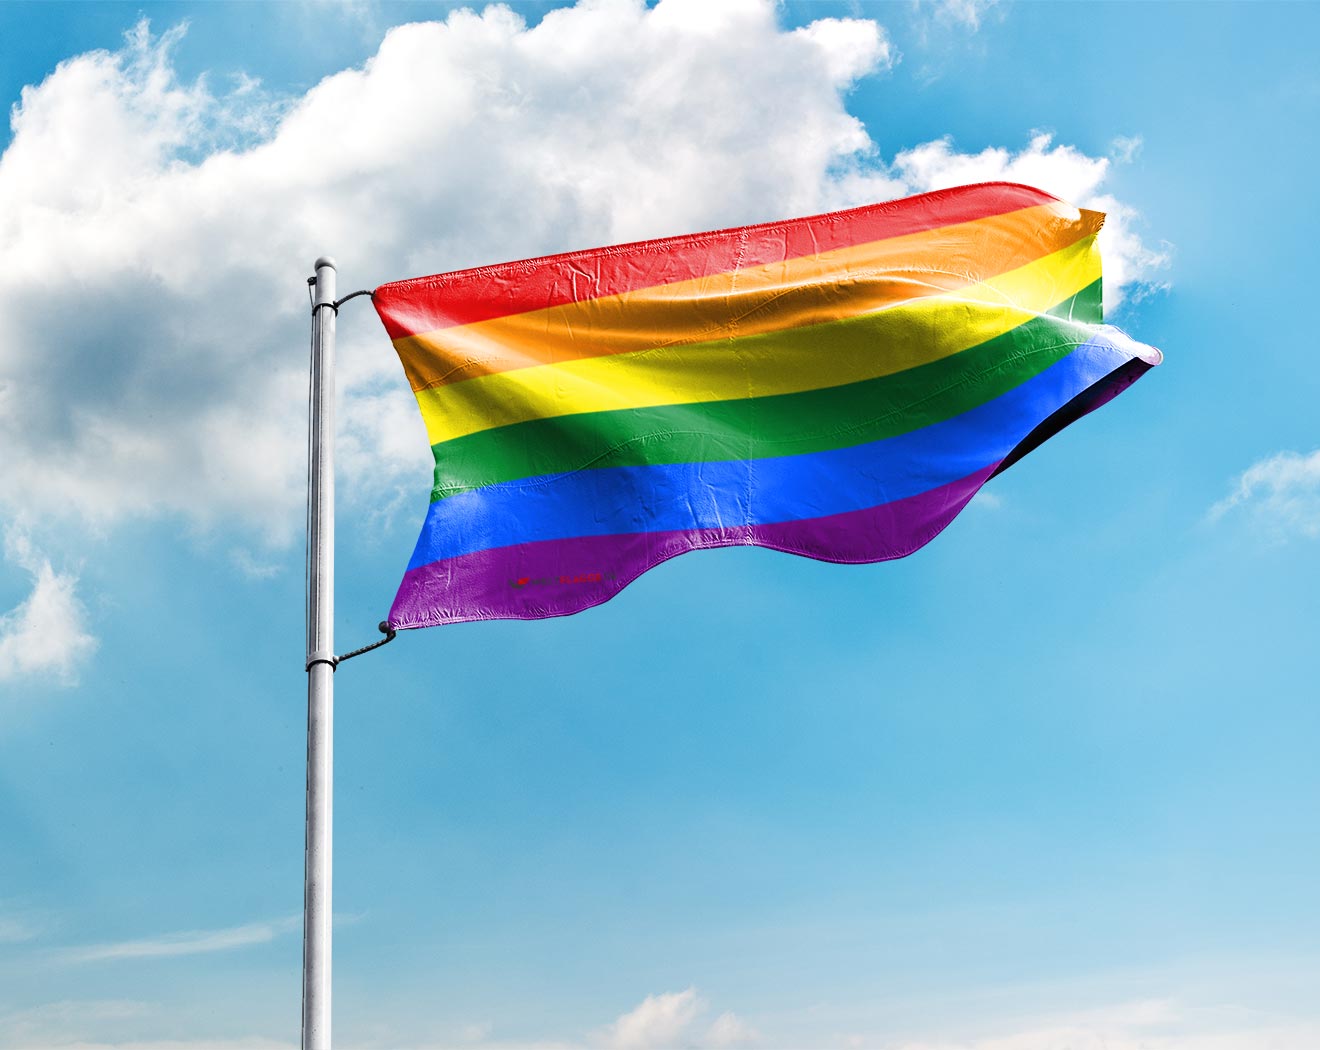 fahne_hissflagge_flagge_regenbogen_stolz_gay_pride_2020_1.jpg